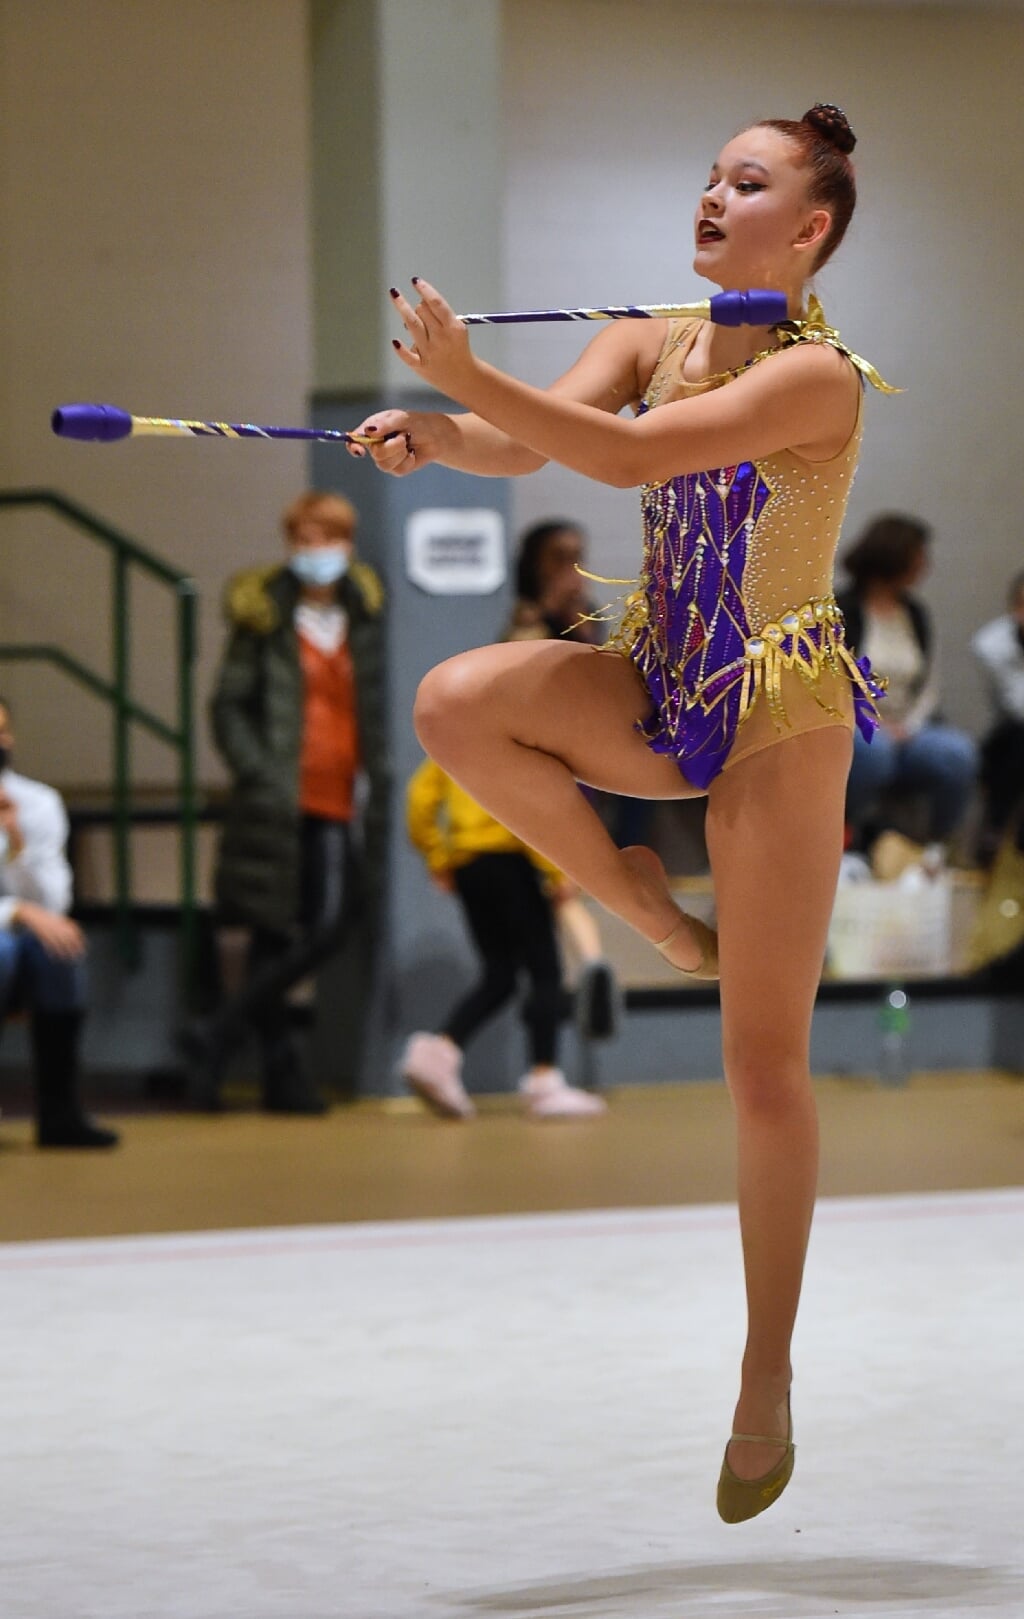 Ook gymnaste Lorelei Csellak uit Sassenheim strijdt mee. | Foto: pr.